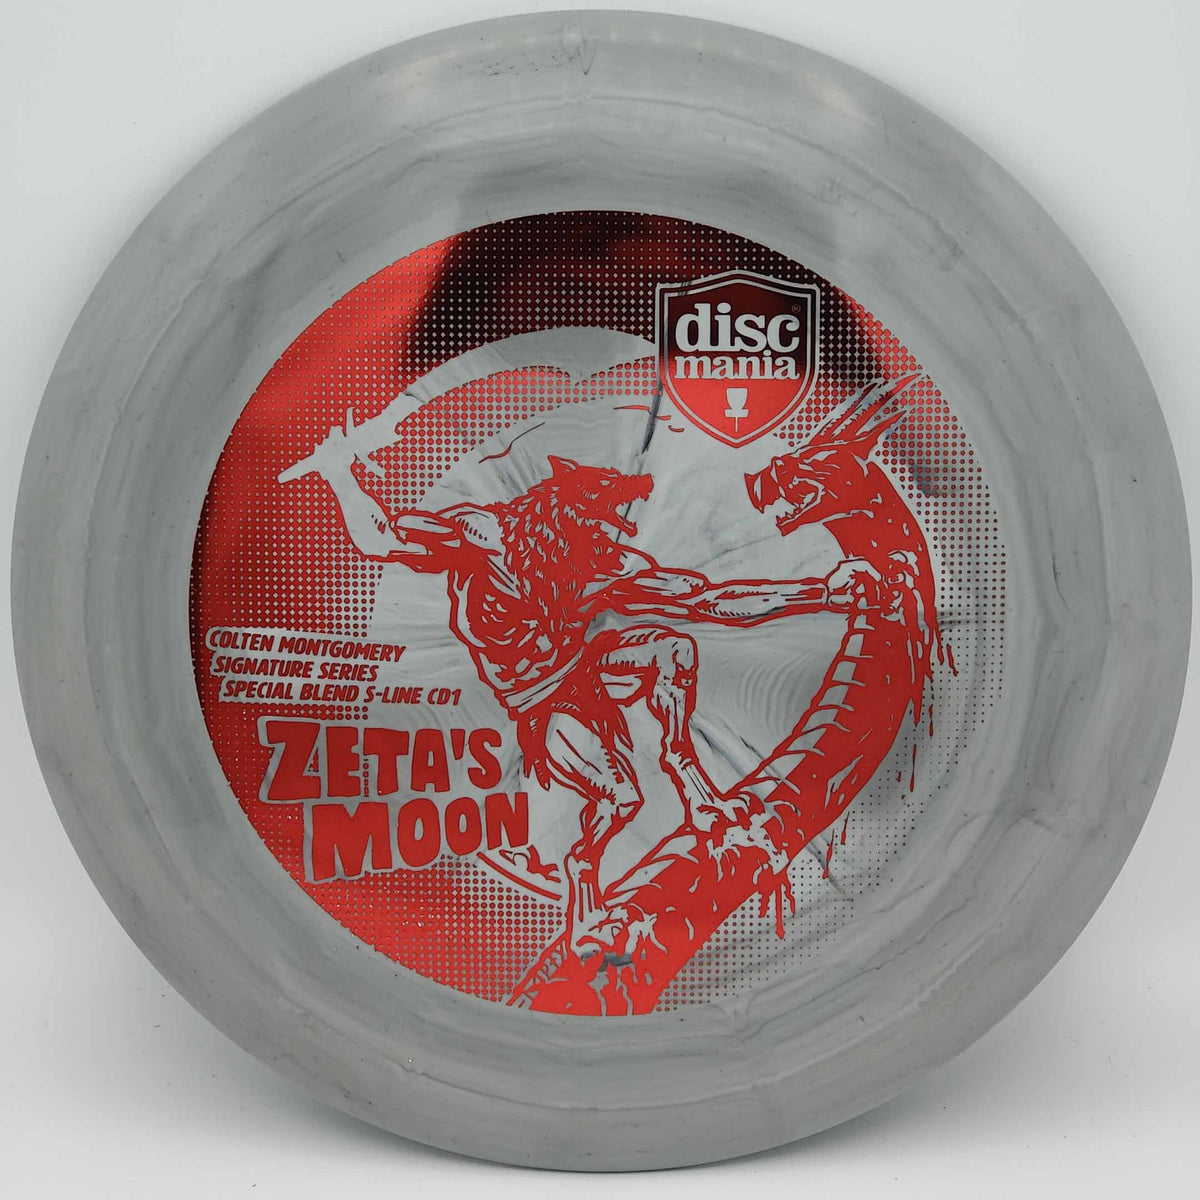 Discmania Zeta's Moon CD1 - Special Blend S-Line Colten Montgomery Signature Series